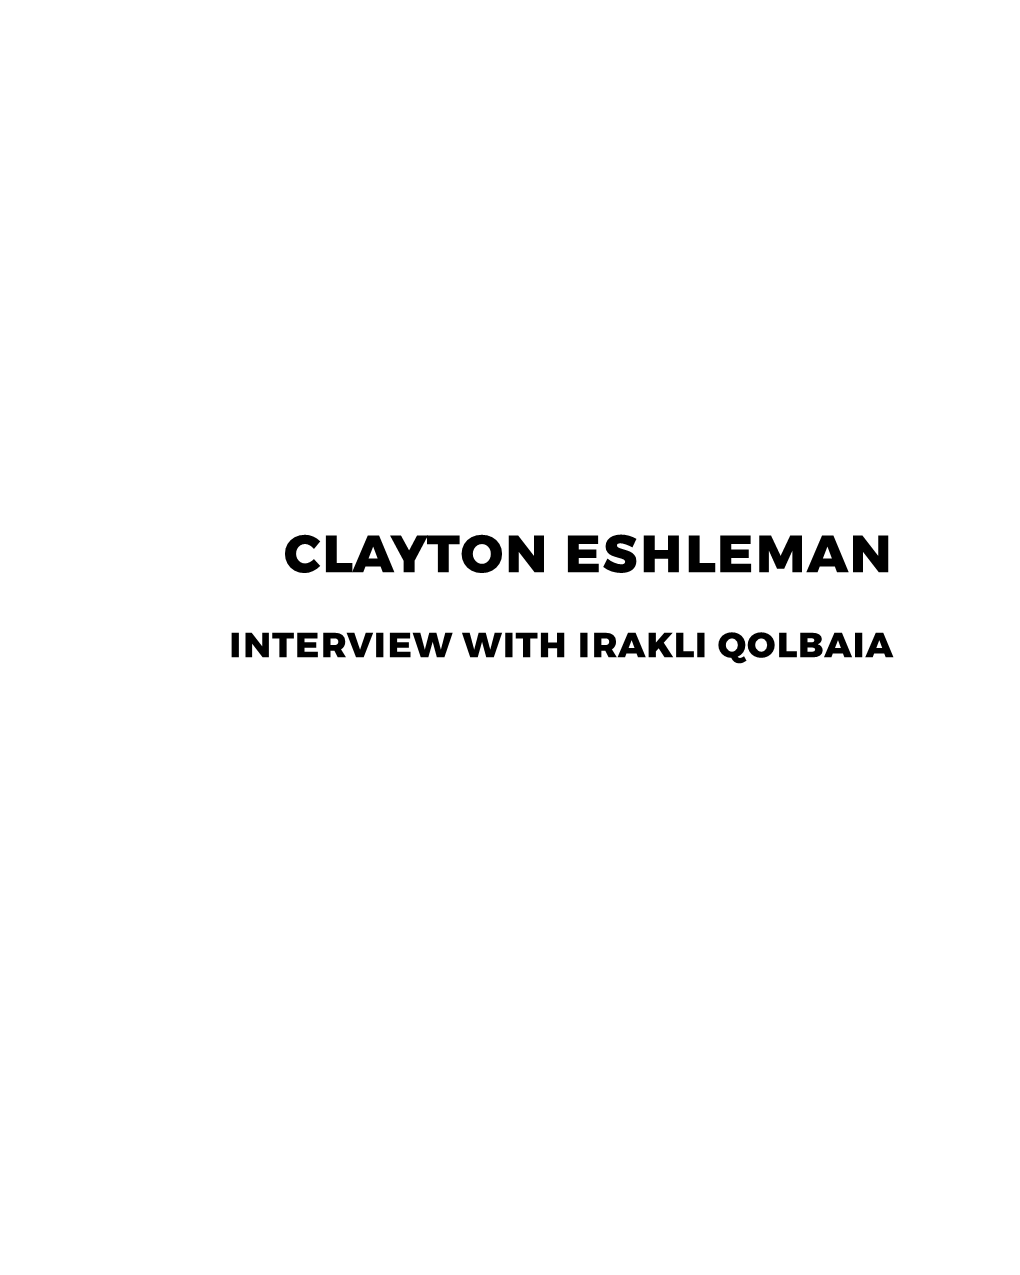 Clayton Eshleman